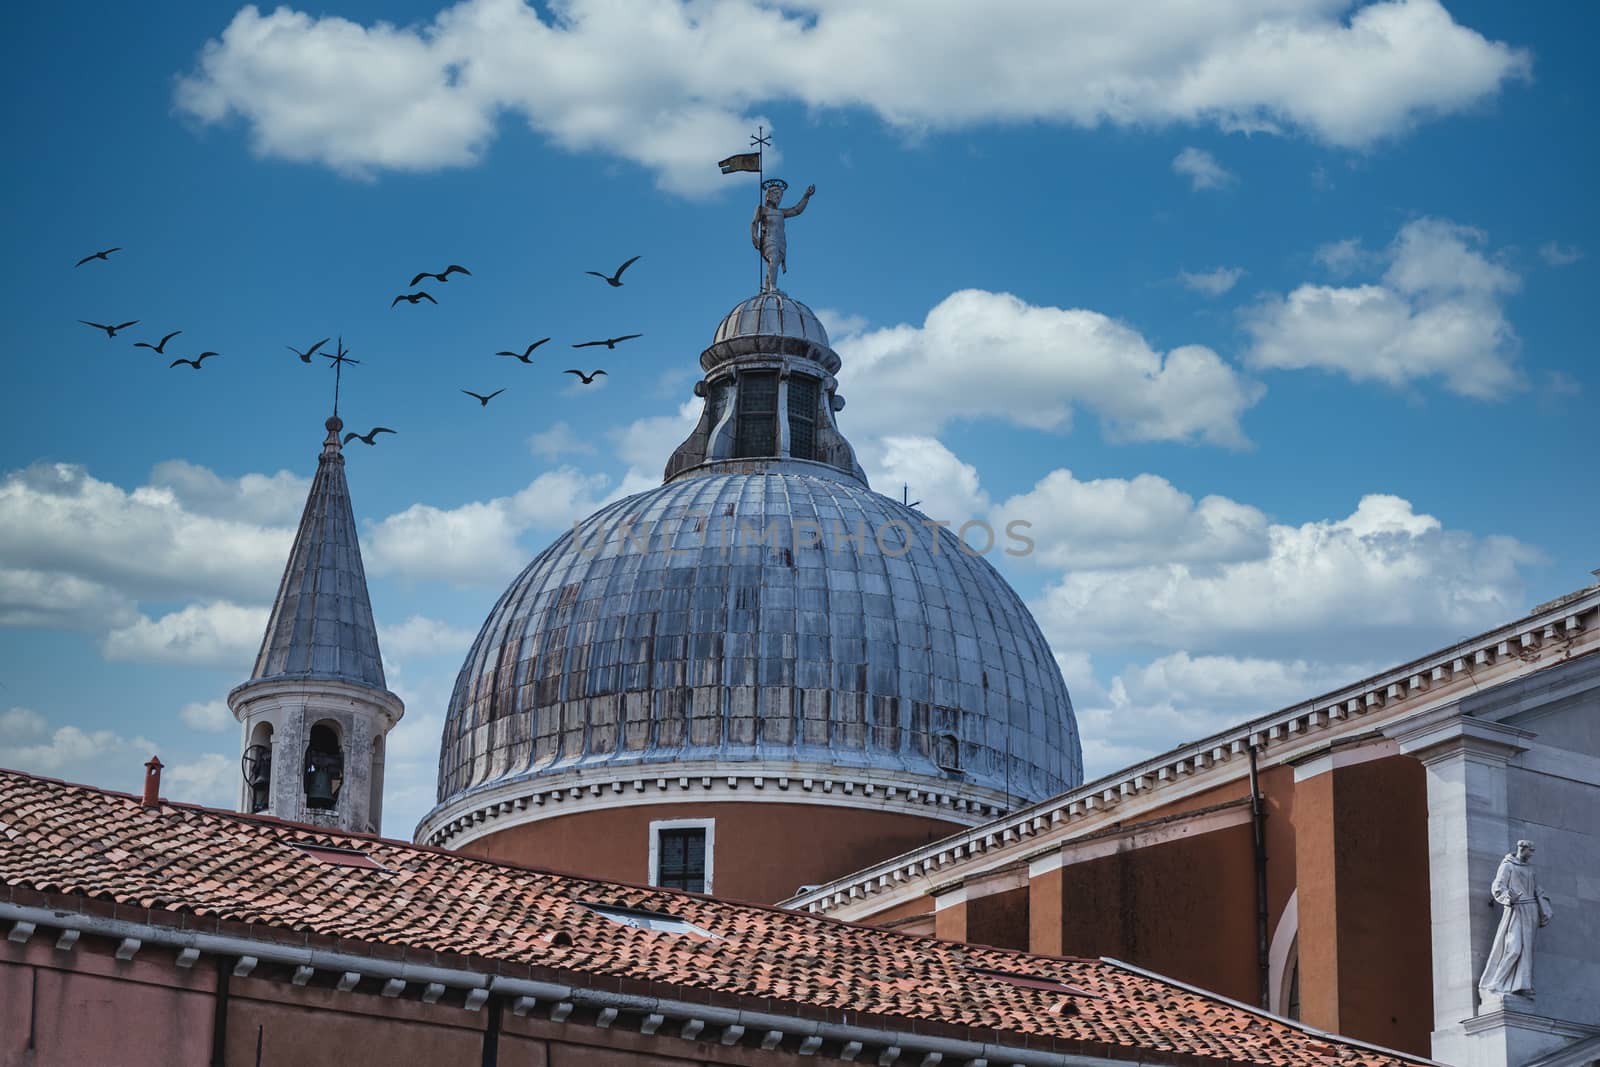 Dome of Church in Venice by dbvirago